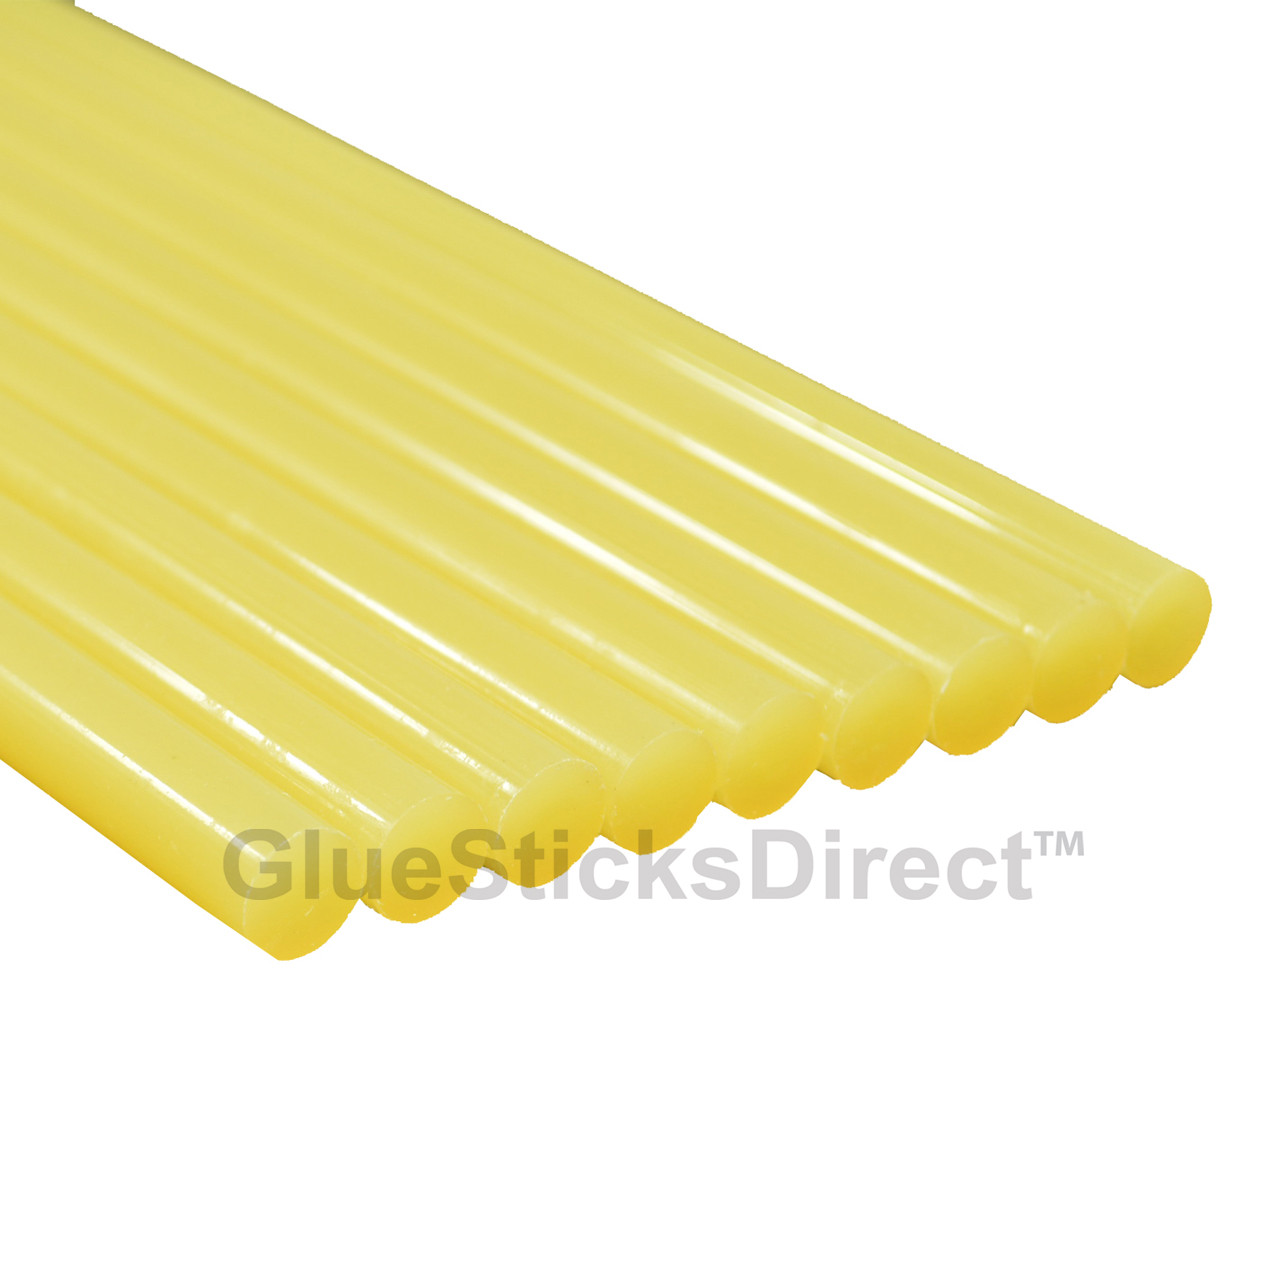 GlueSticksDirect  123711 Tan Colored Glue Sticks 7/16" X 10" 5 lbs